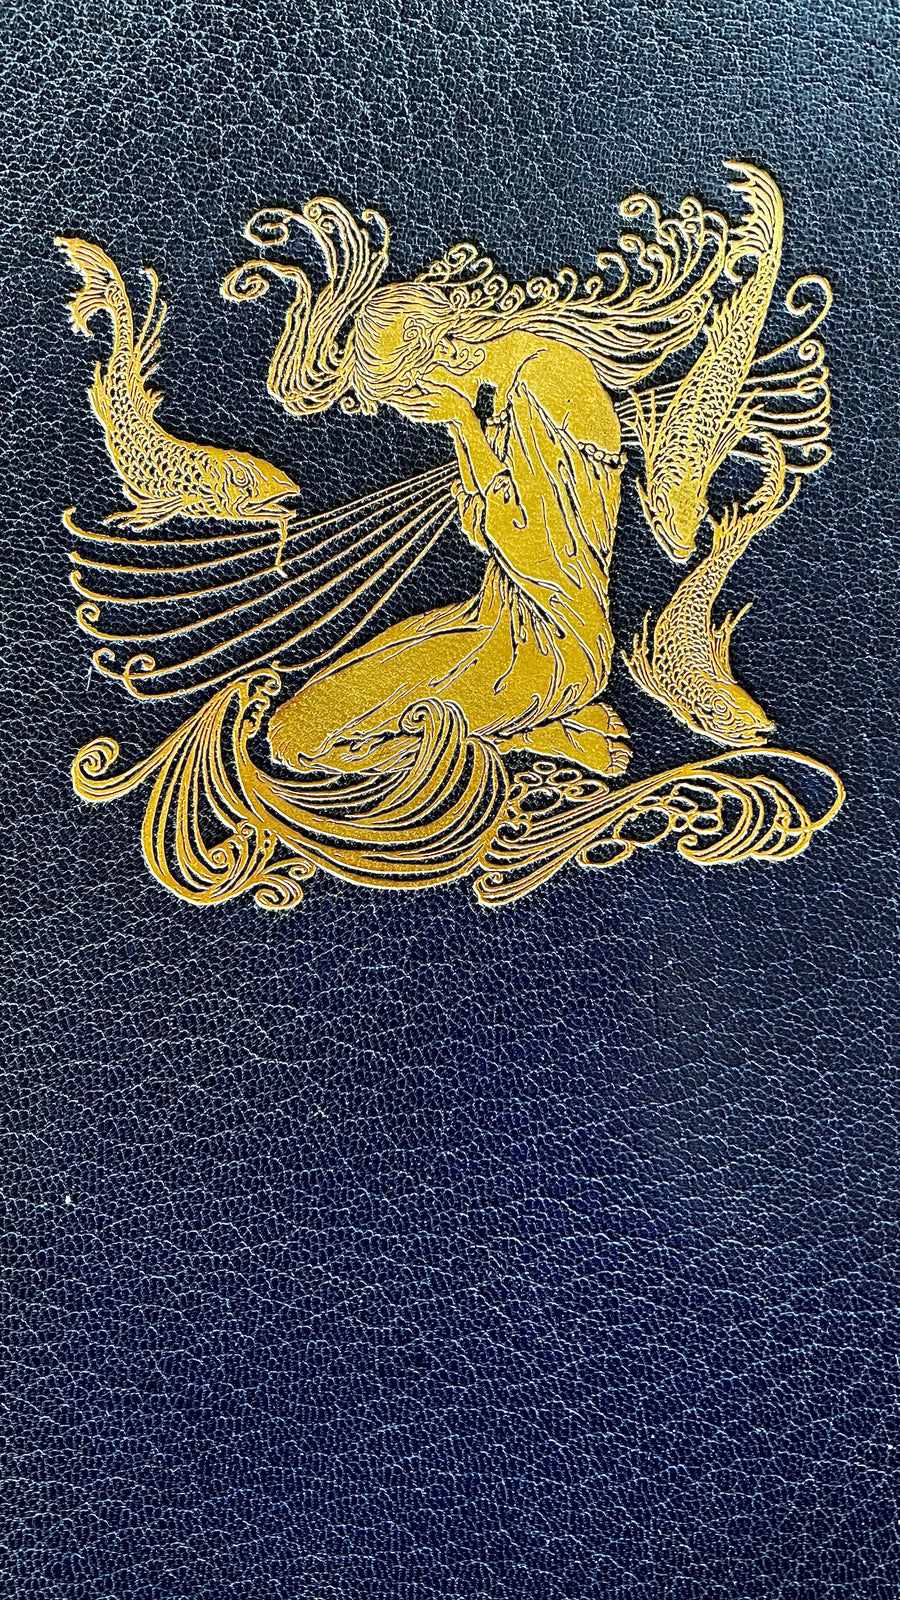 1909 - Undine, Arthur Rackham Illustrated